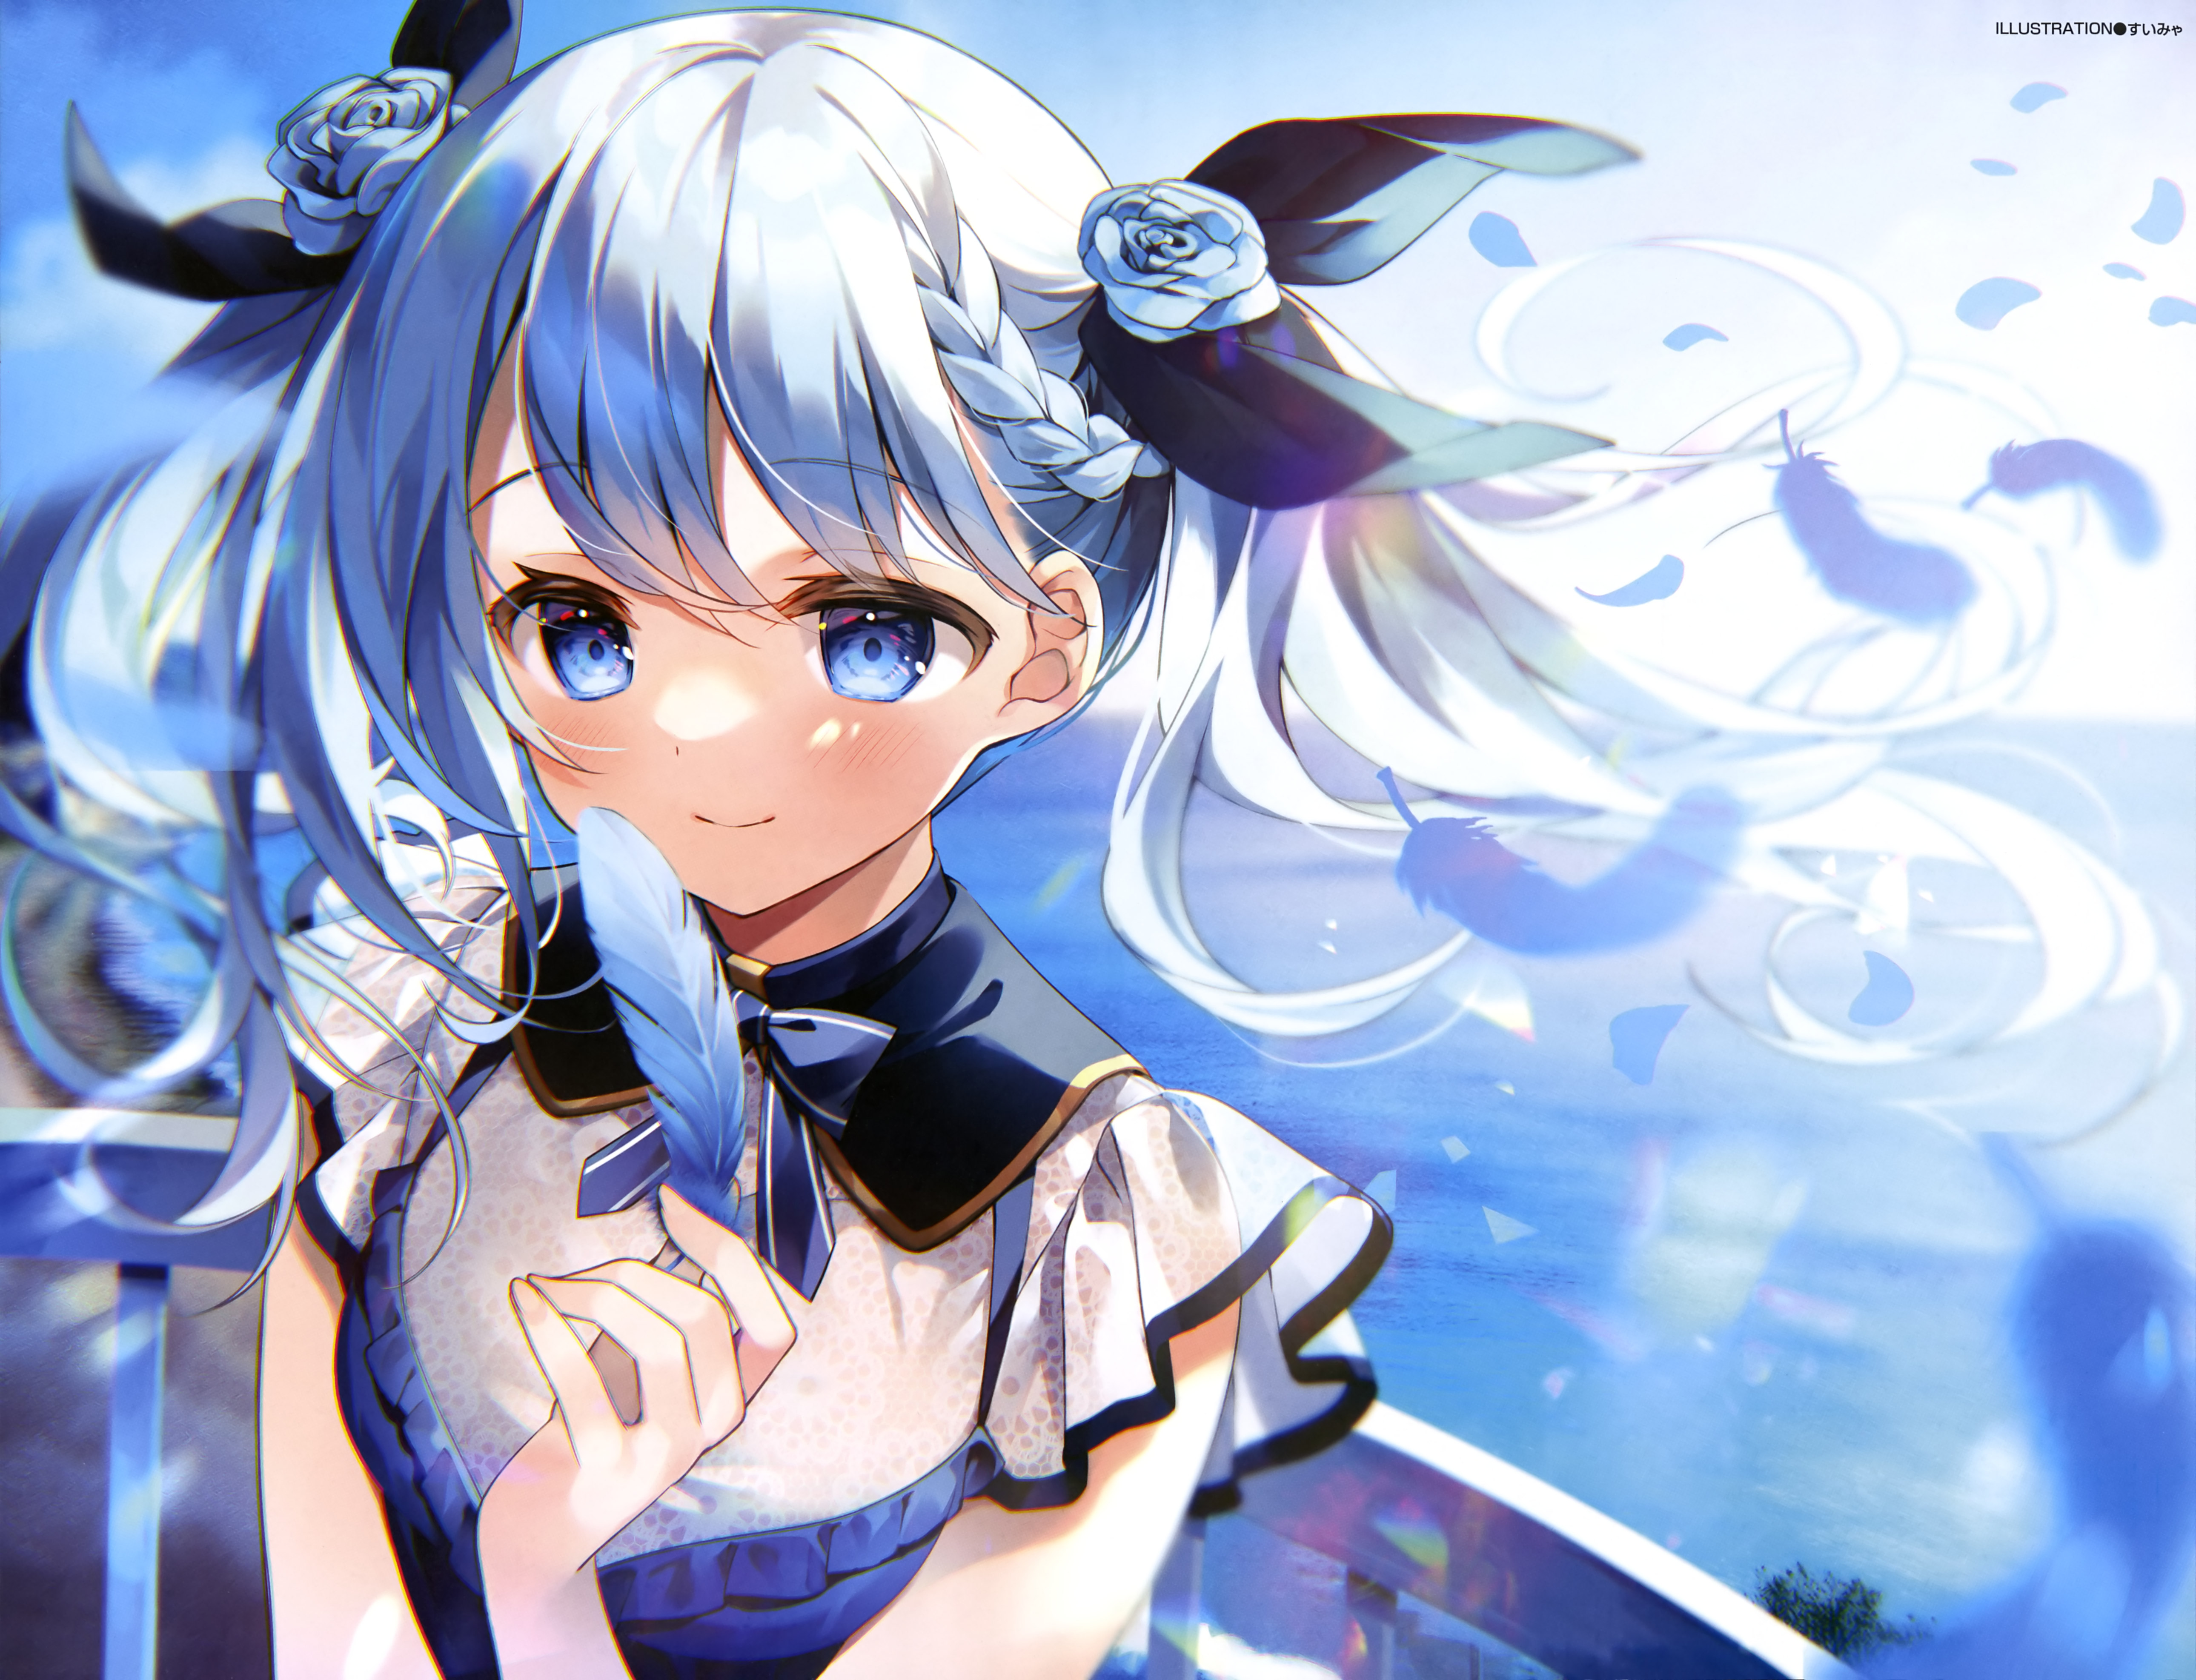 Anime Anime Girls Suimya Artwork Blue Hair Blue Eyes Smiling Feathers 5159x3947